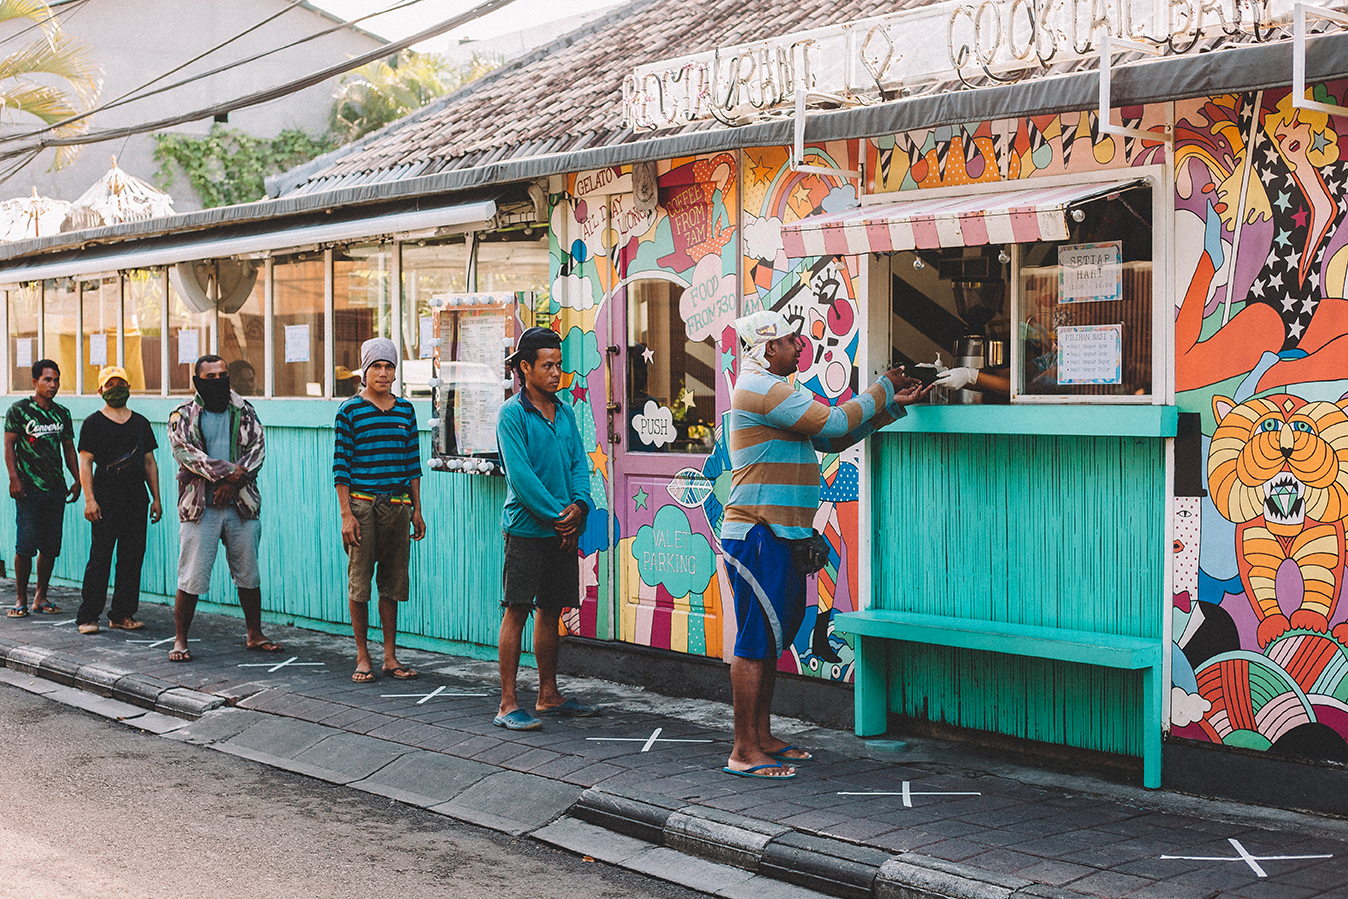 Sea Circus Restaurant & Bar - Restaurants in Bali Where You Can Get Poke Bowl